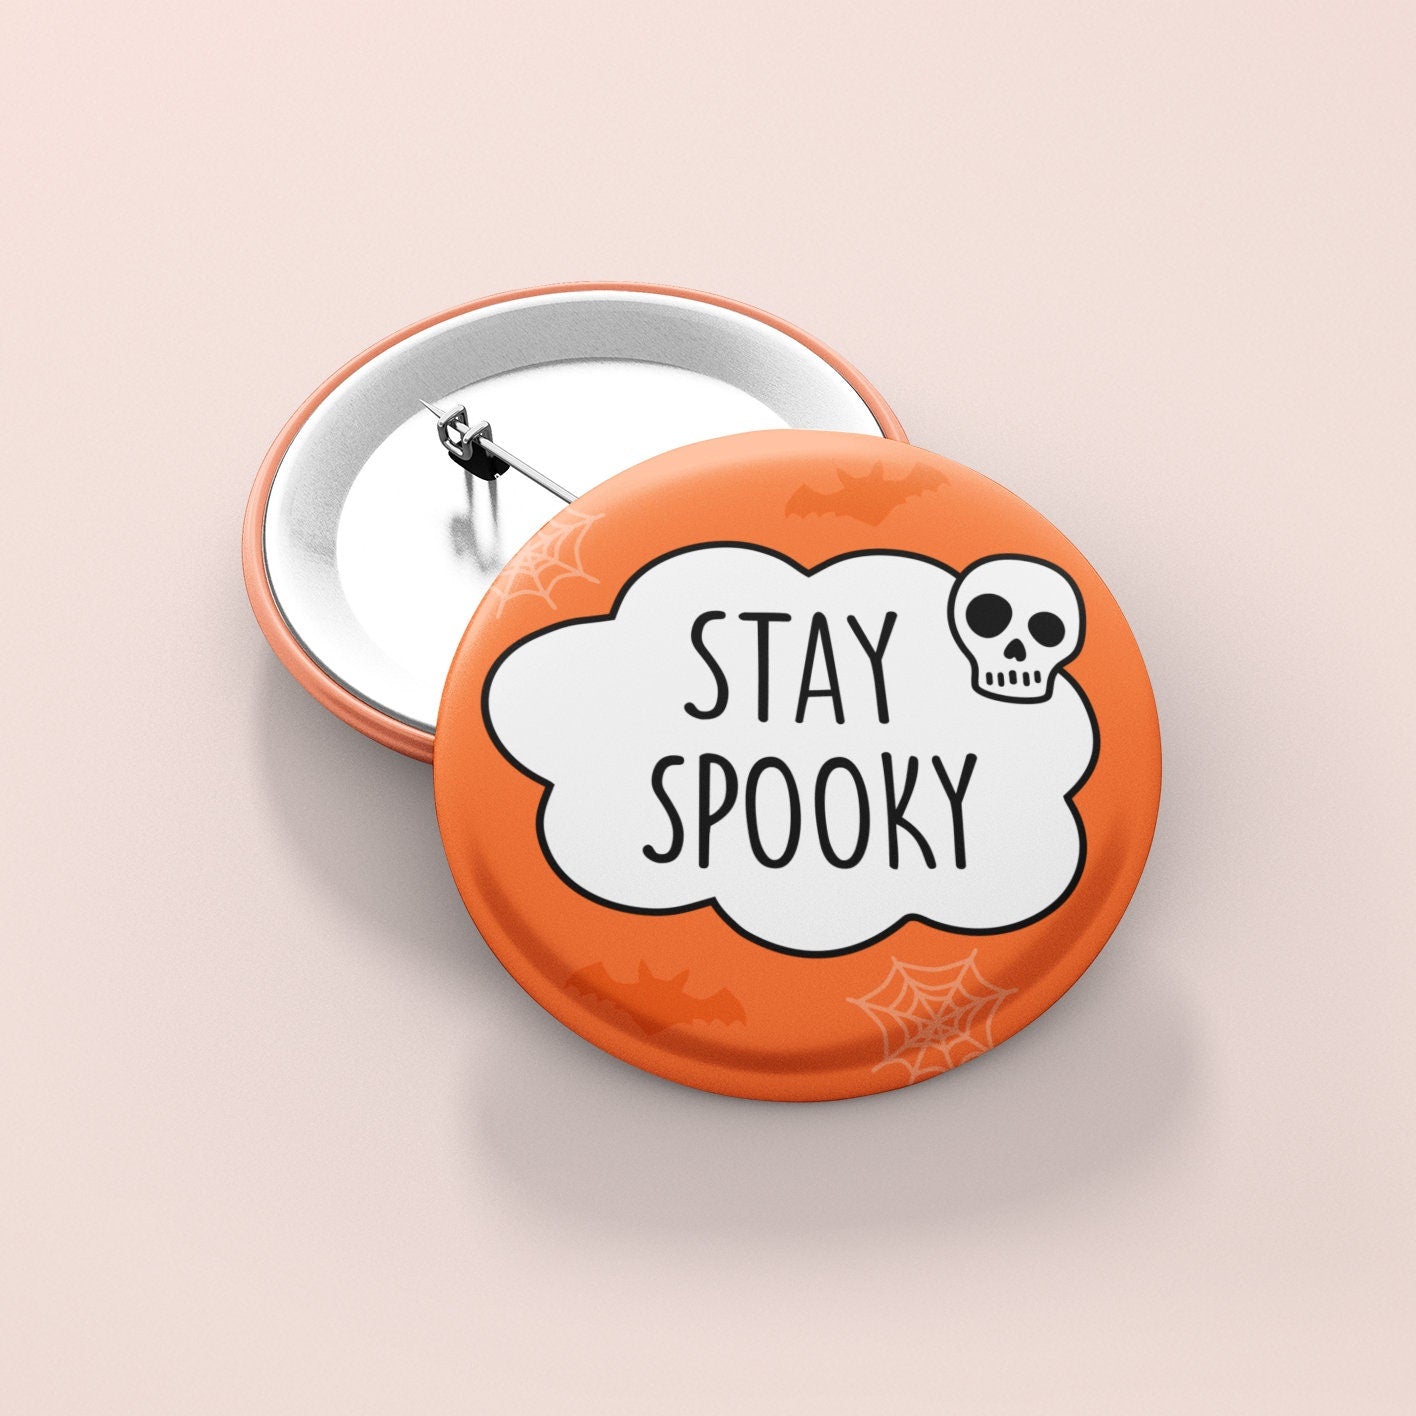 Stay Spooky Badge Pin | Halloween Gift - Skeleton Badges - Autumn - Fall - Spooky Season